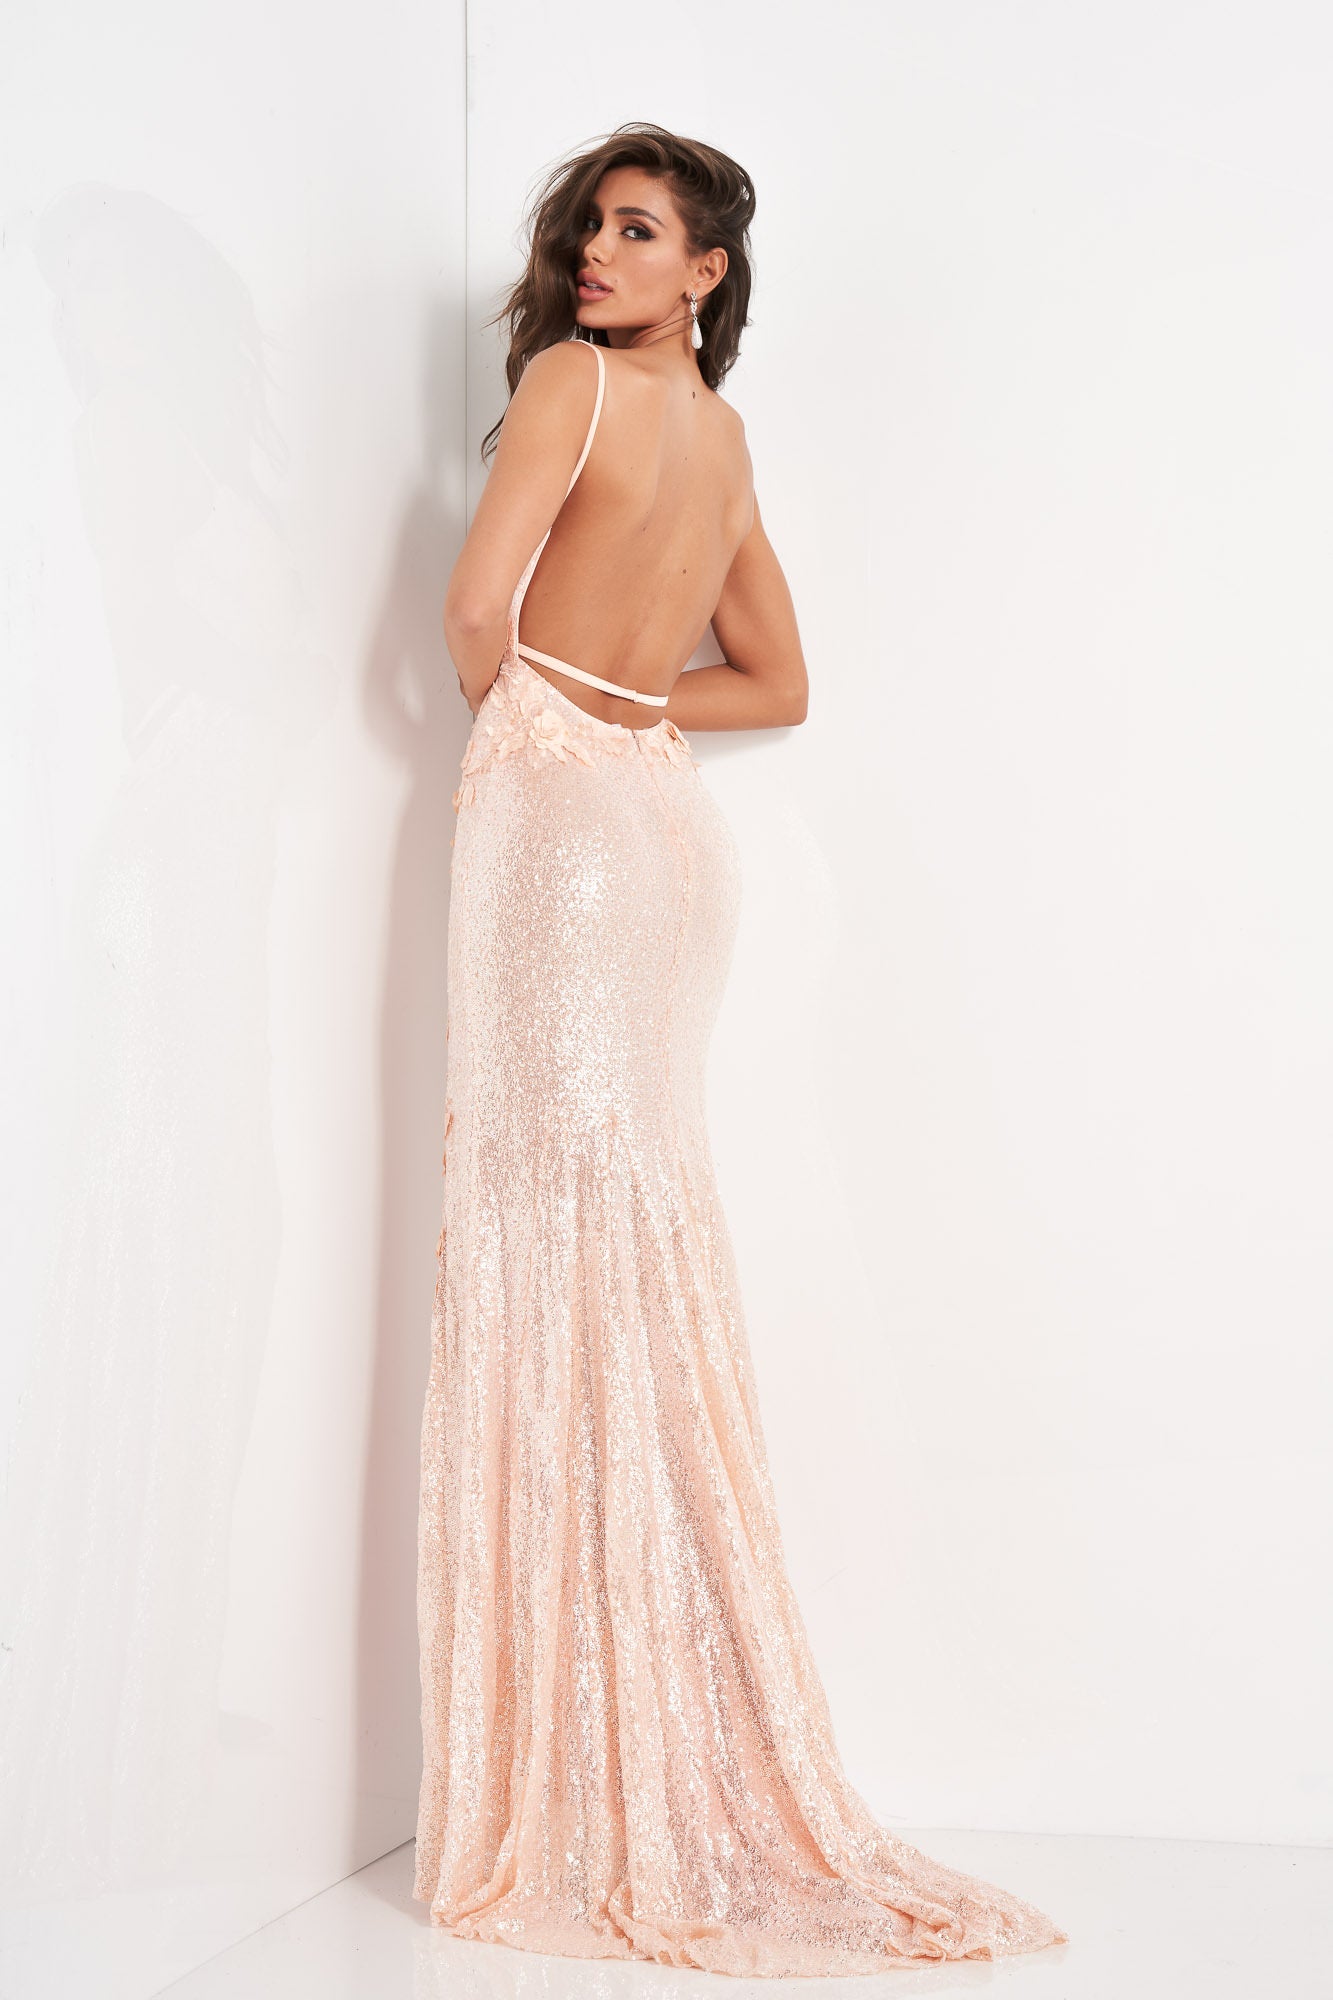 Jovani 1012 Rose Gold Prom Dress size 10 Long Sequin Fitted Dress Slit Floral Appliques